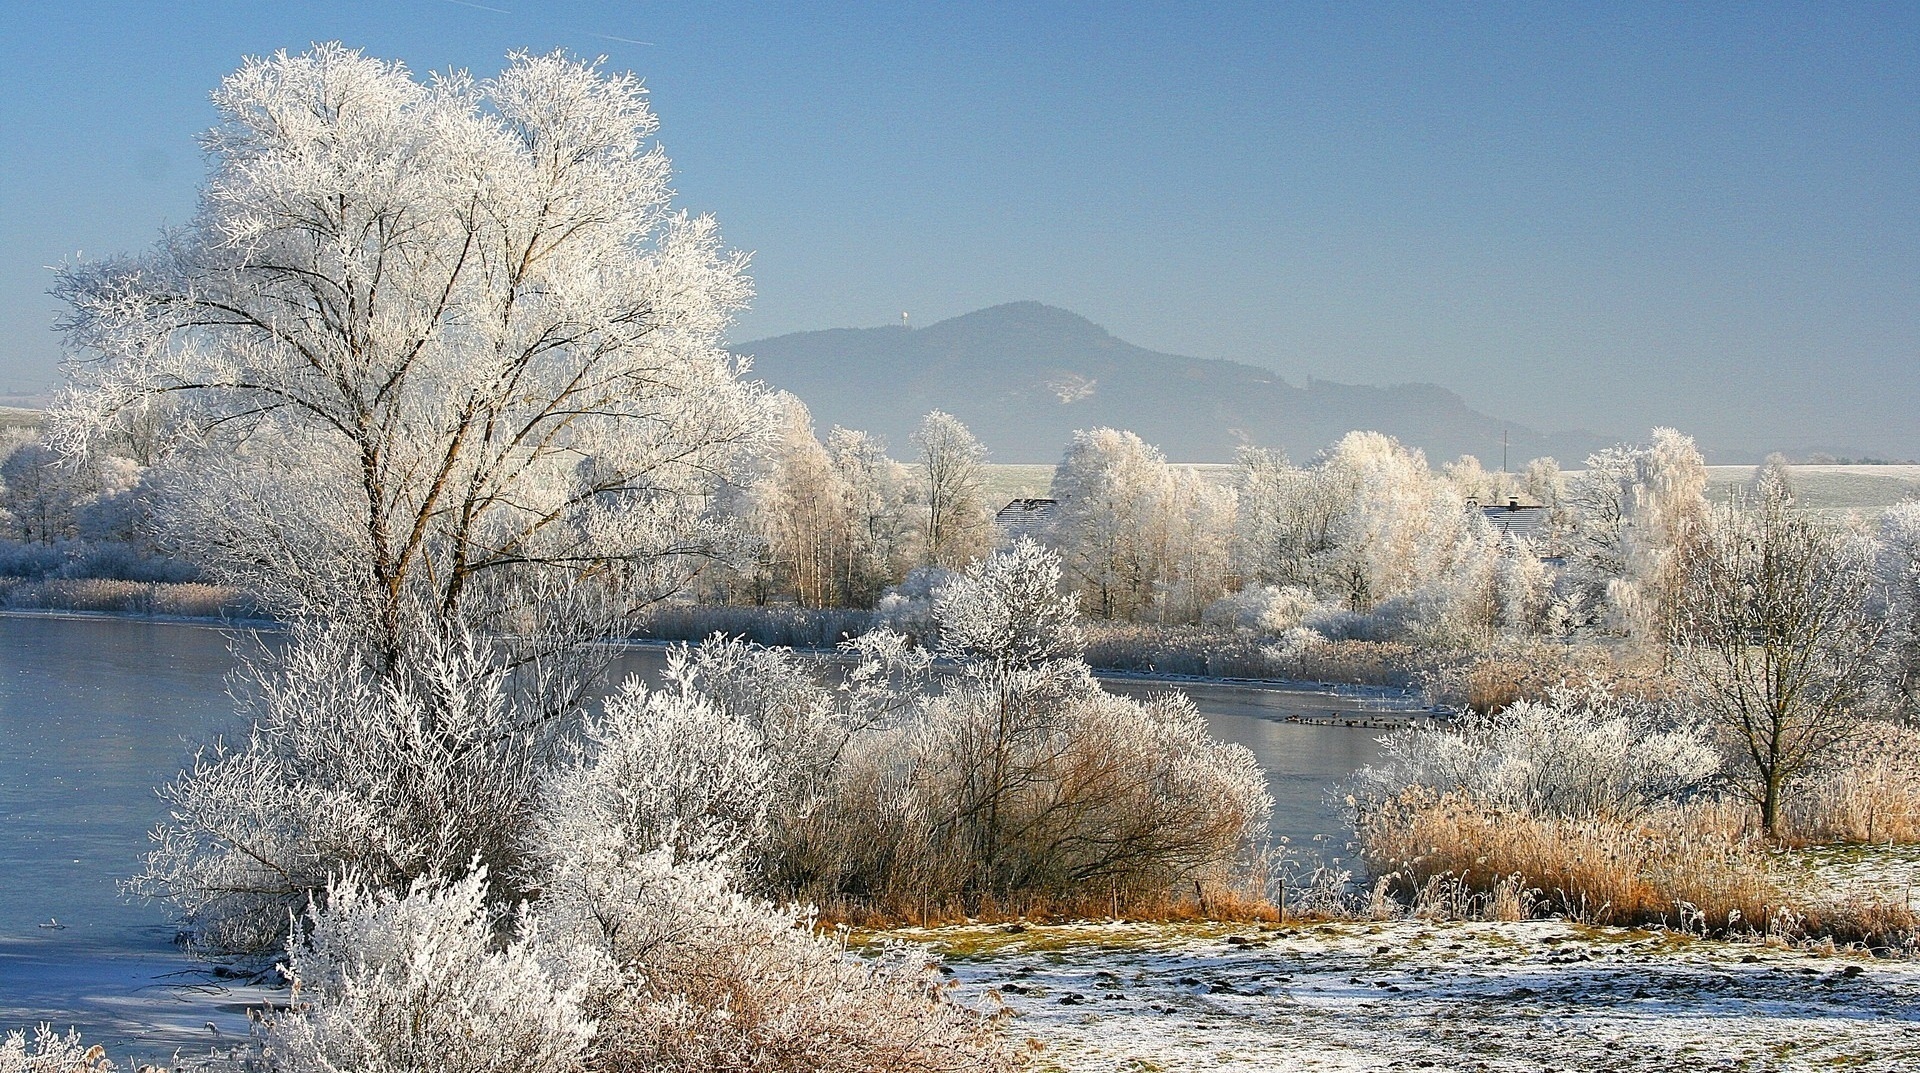 Trees in winter - Nature's Seasons Photo (22173946) - Fanpop